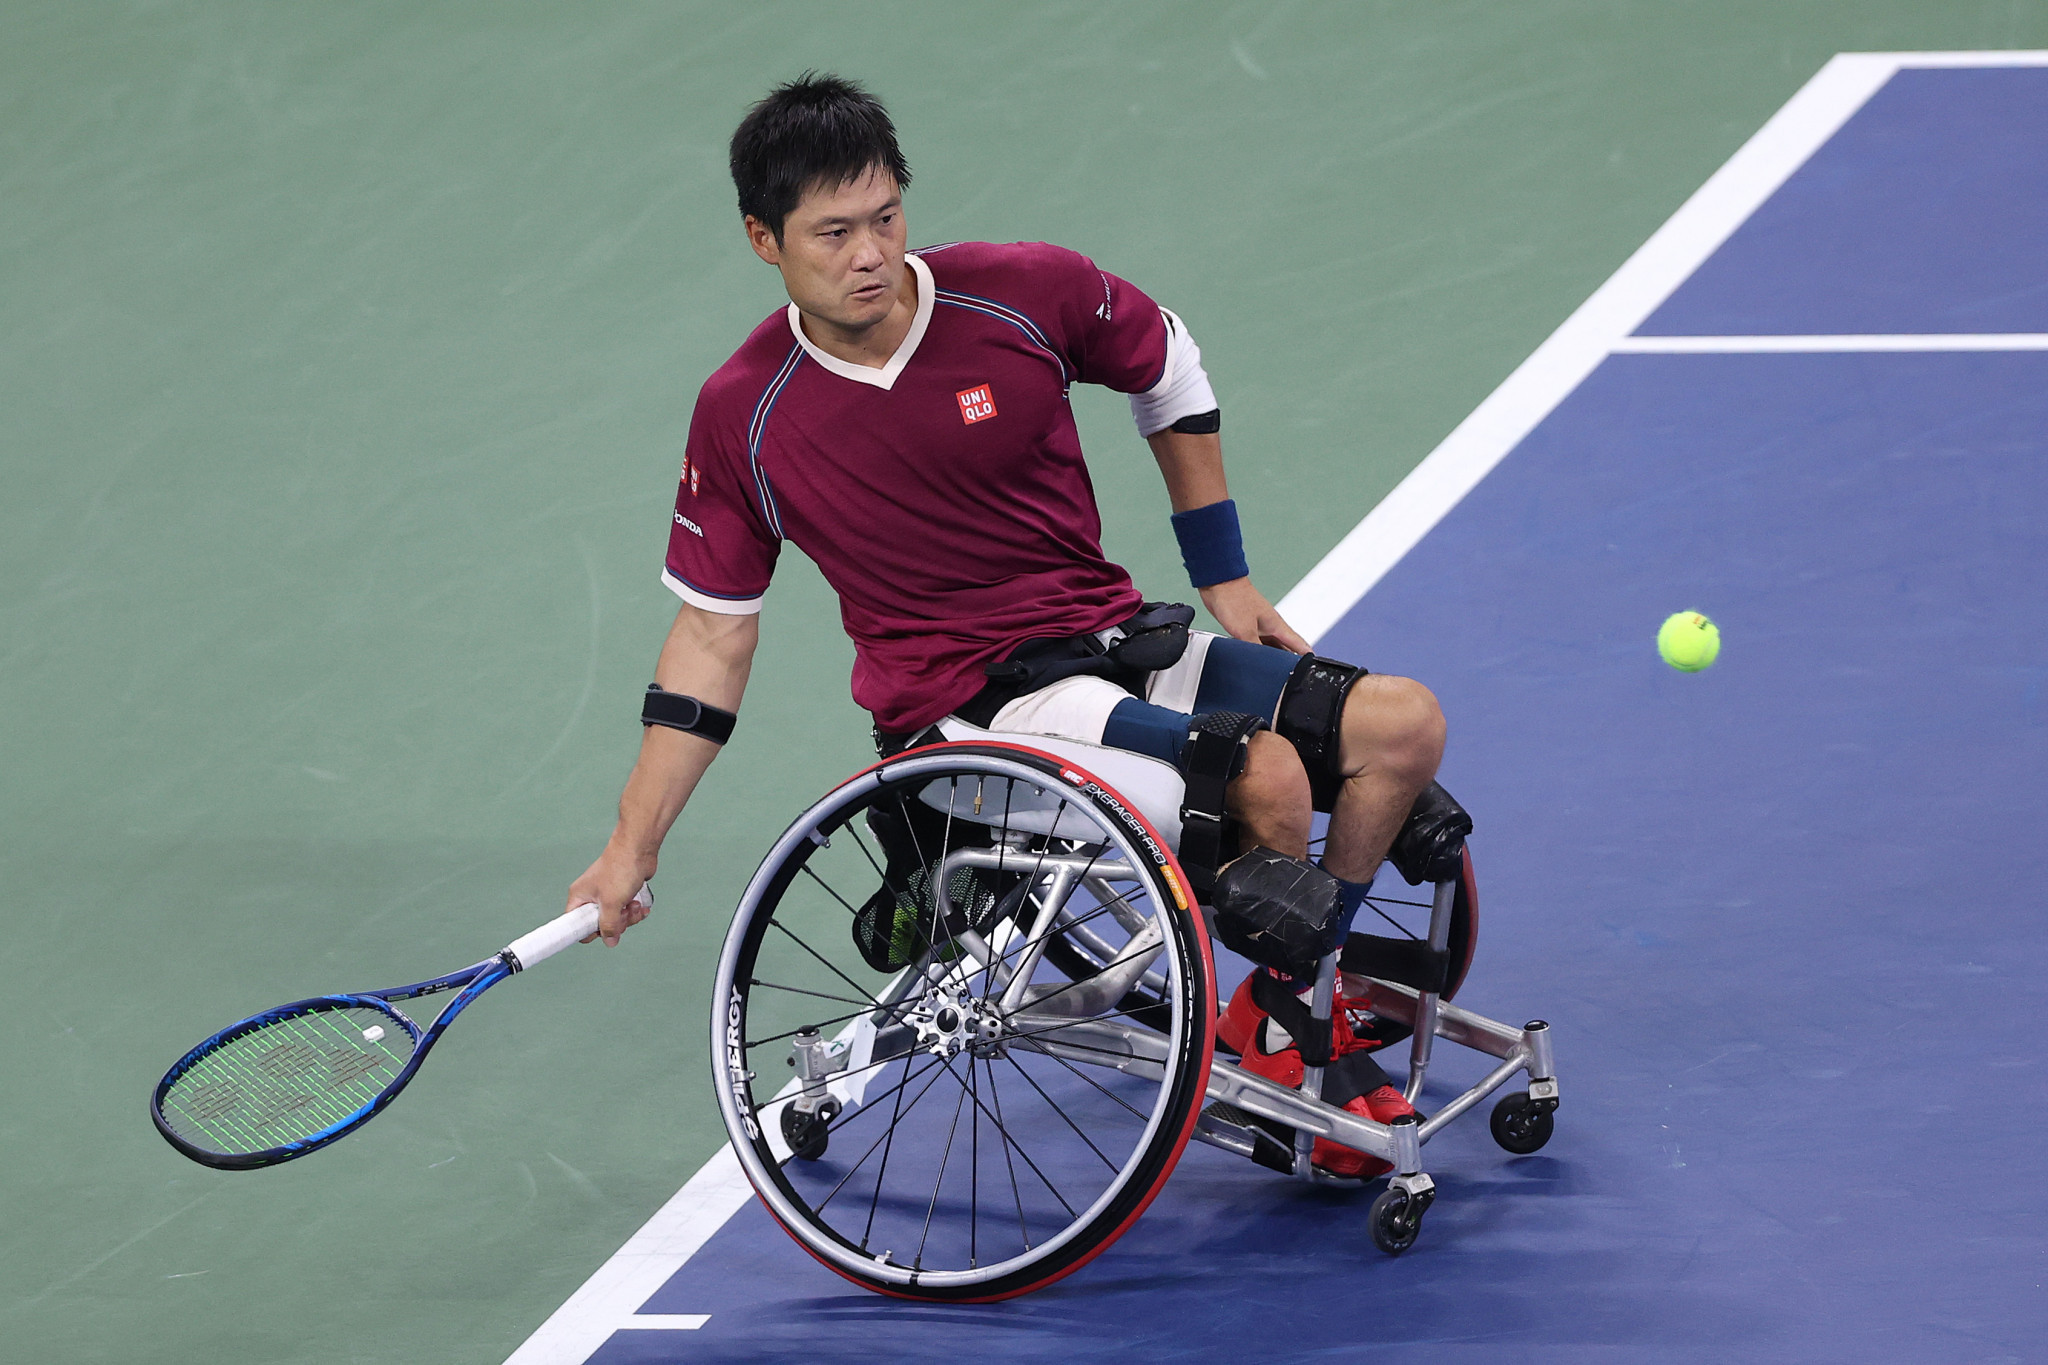 Men's singles Paralympic champion Shingo Kunieda of Japan said the sponsorship deal with UNIQLO 